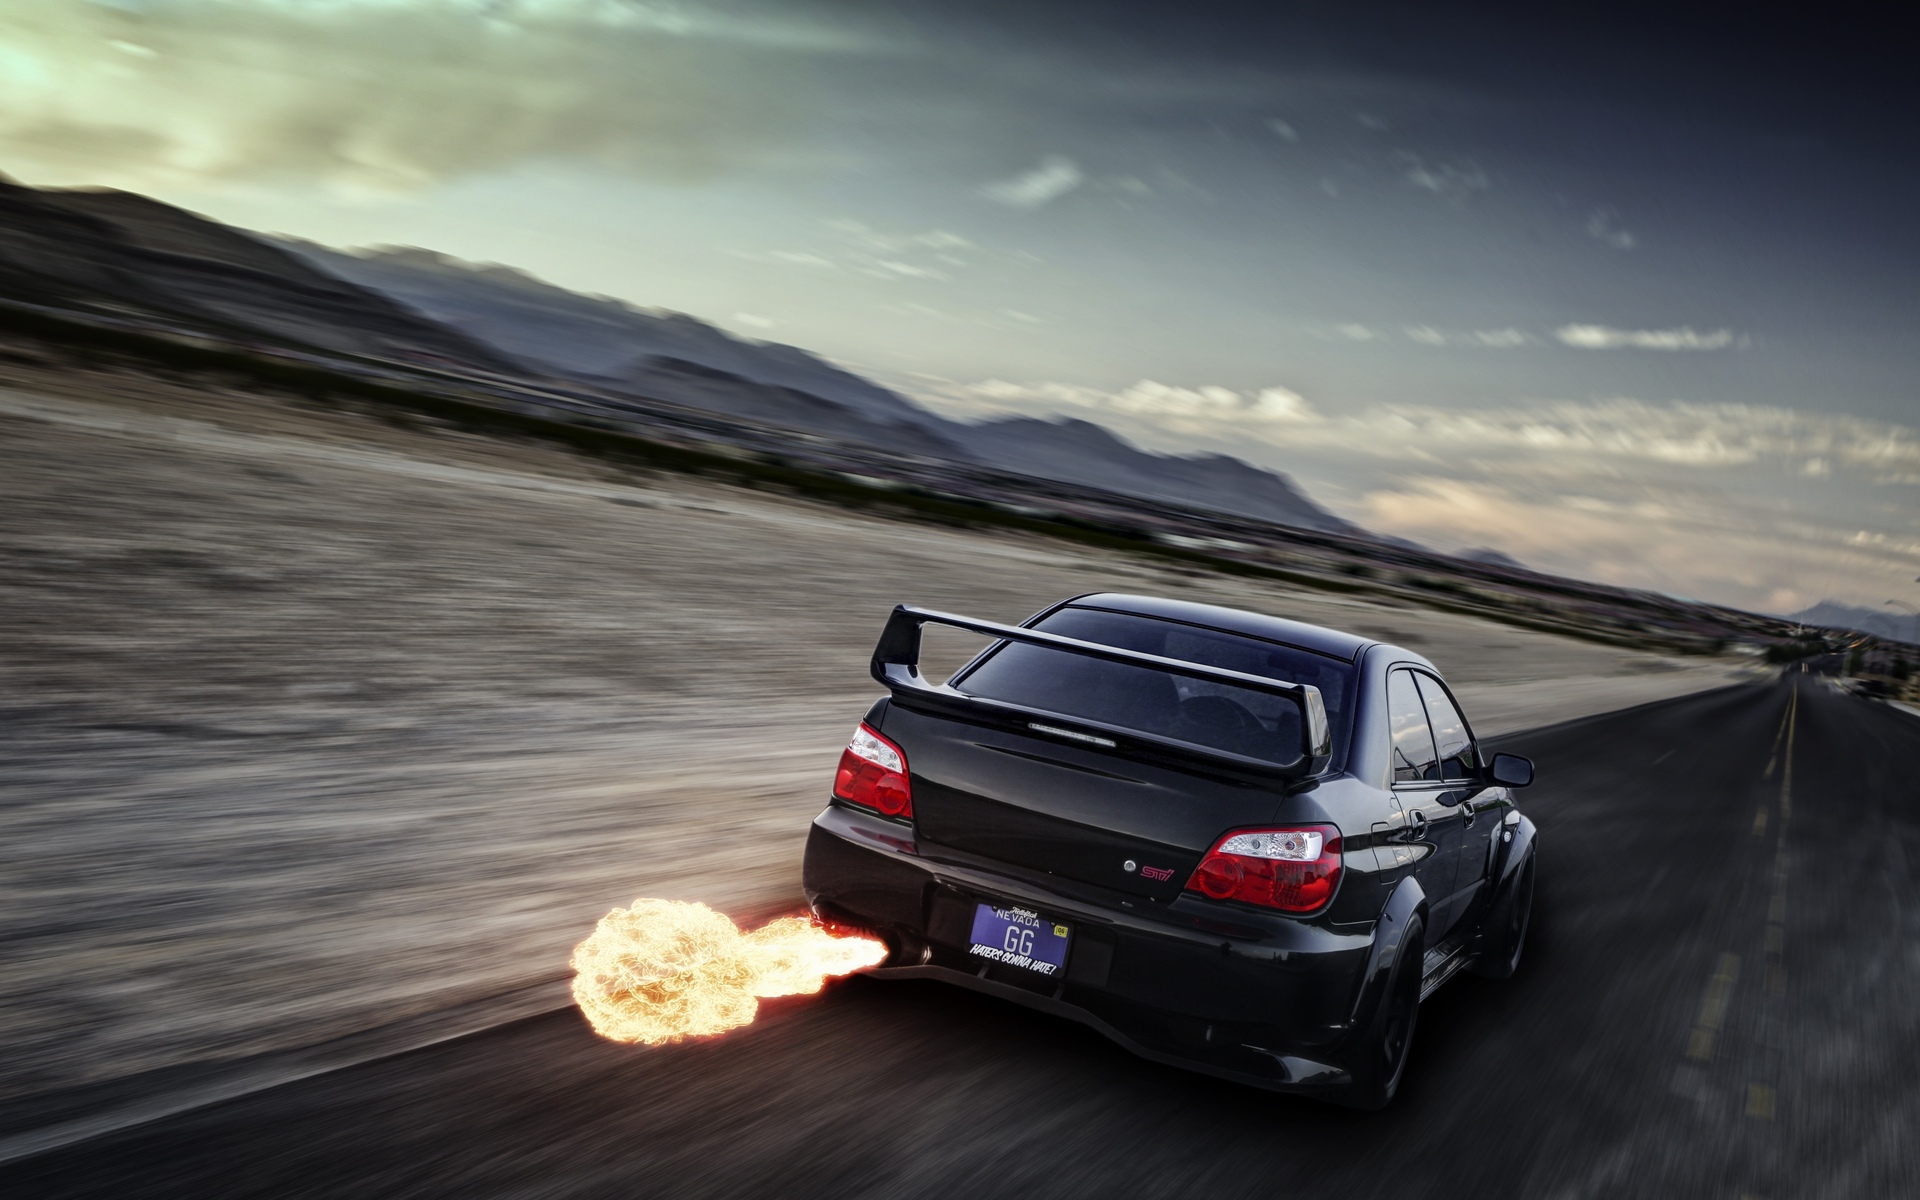 Subaru Impreza Wrx Sti Tuning Fire Flames Exhaust